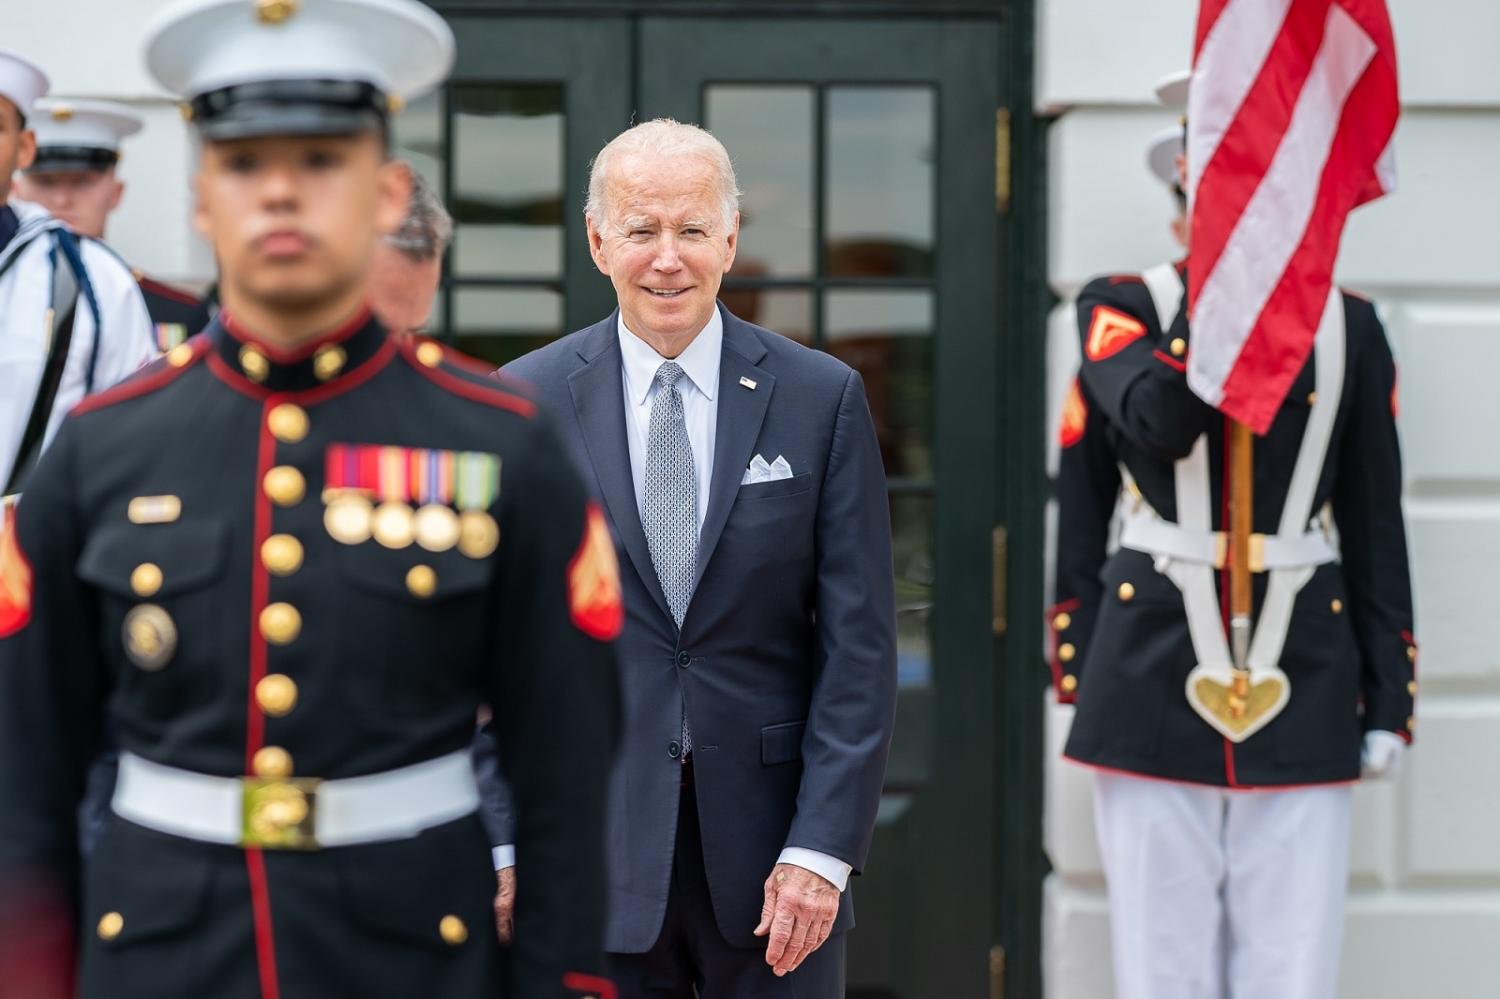 President Joe Biden welcomes ASEAN leaders to the White House, 12 May 2022 (Katie Ricks/White House/Flickr)